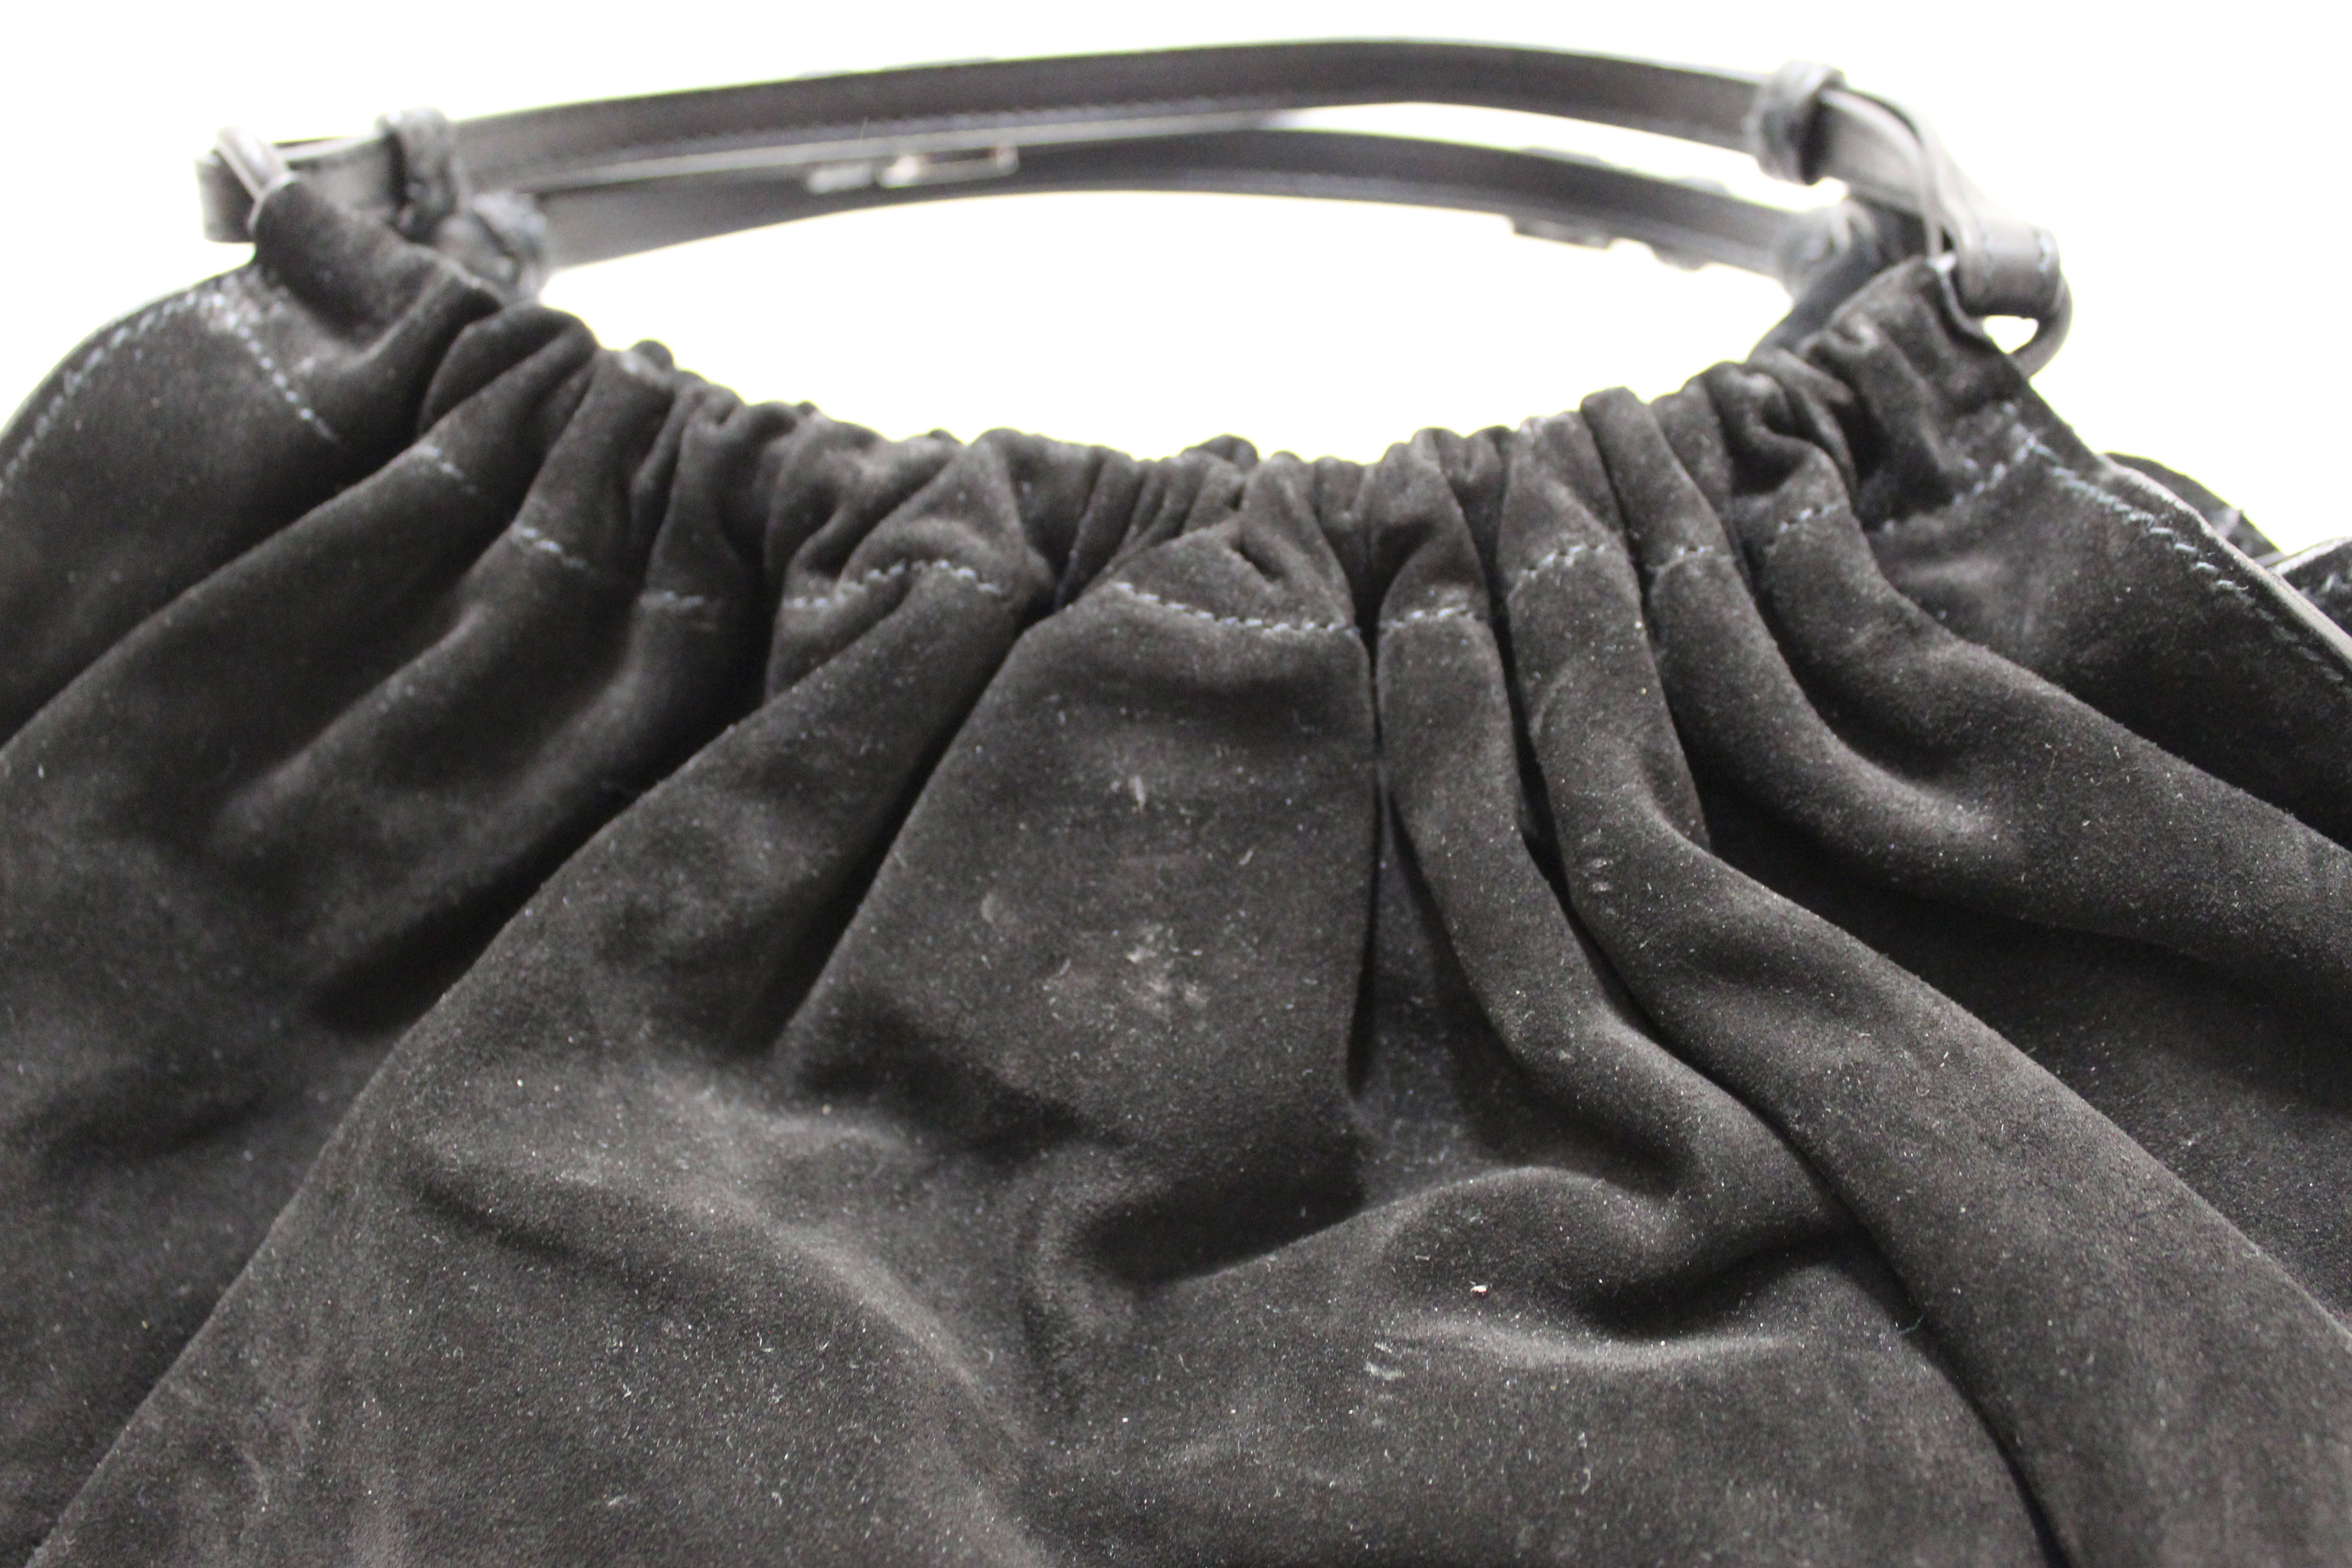 Authentic Gucci Black Suede Leather Hobo Shoulder Bag